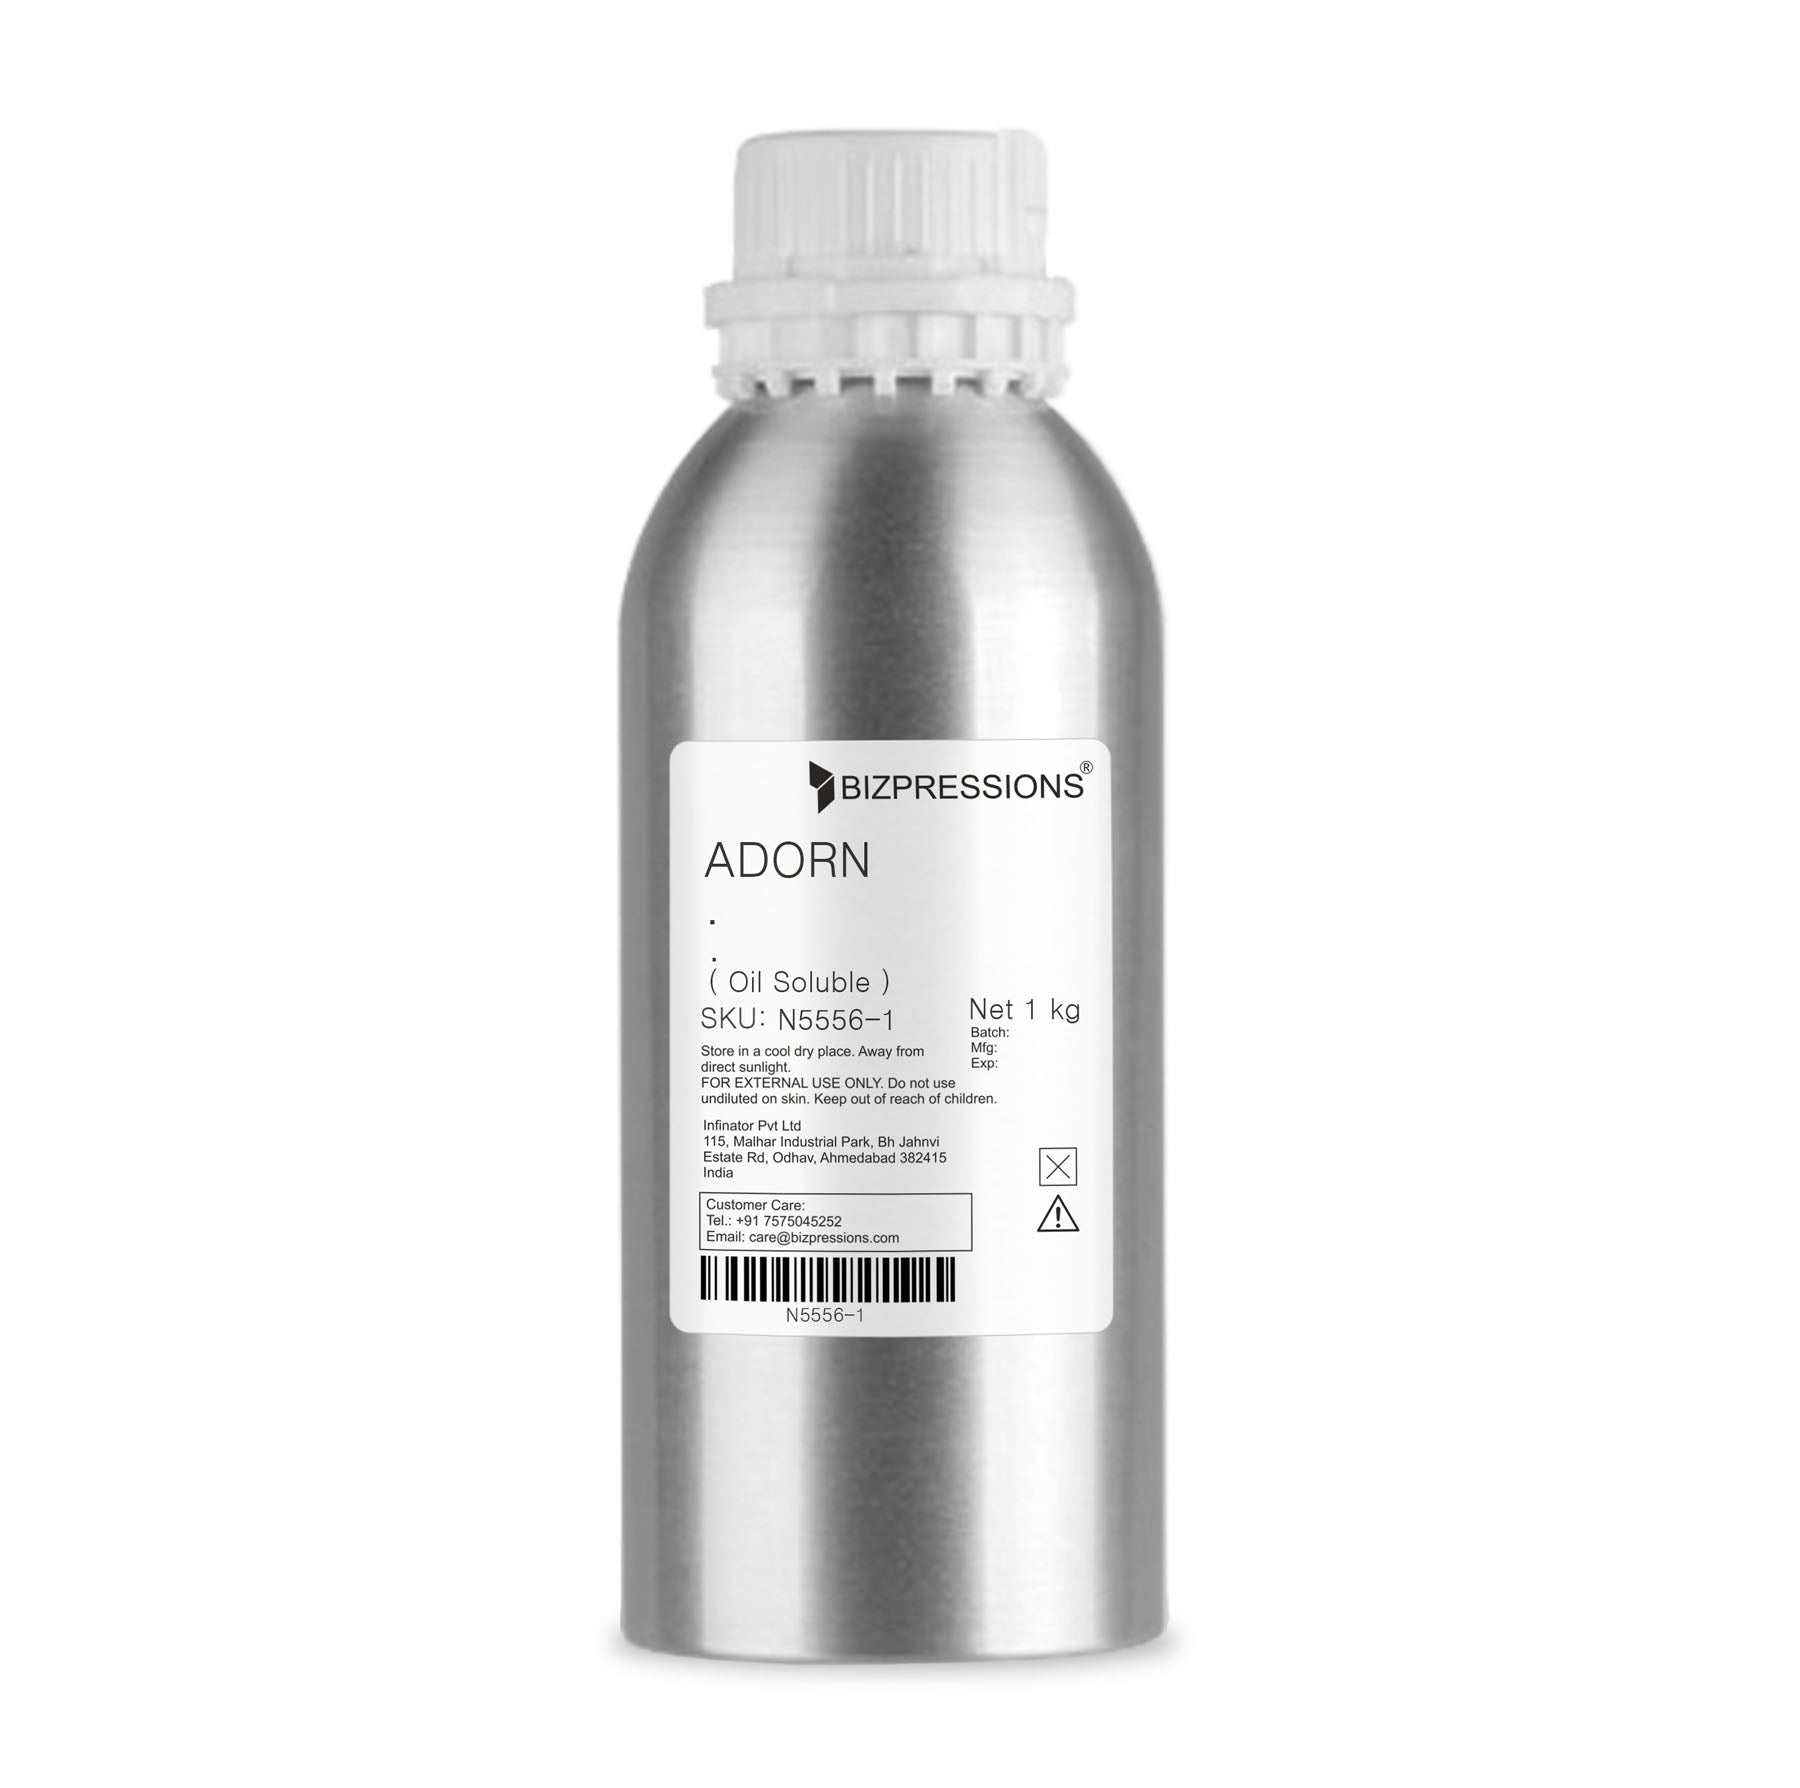 ADORN - Fragrance ( Oil Soluble ) - 1 kg